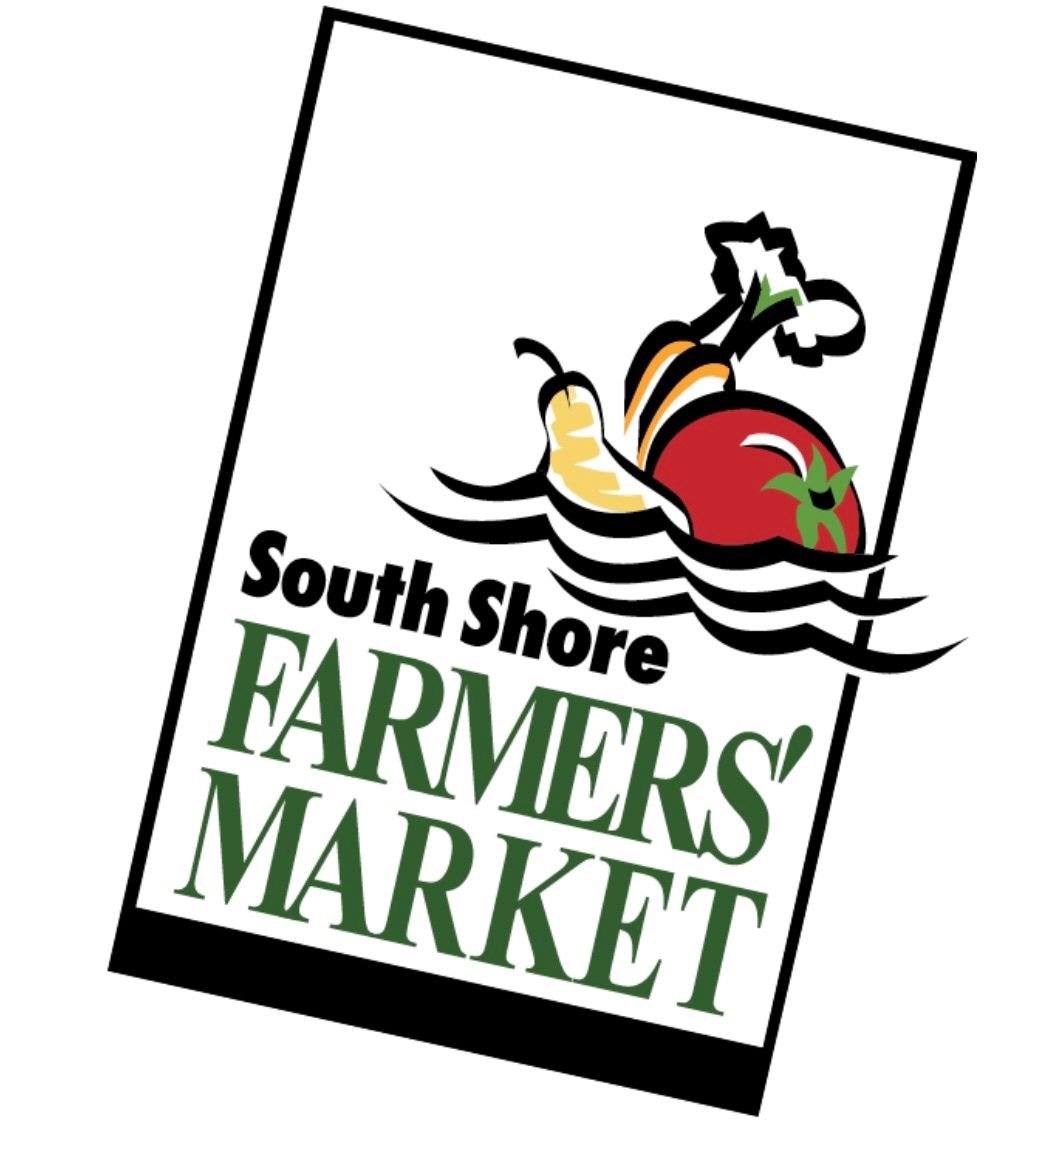 South Shore Farmers Market